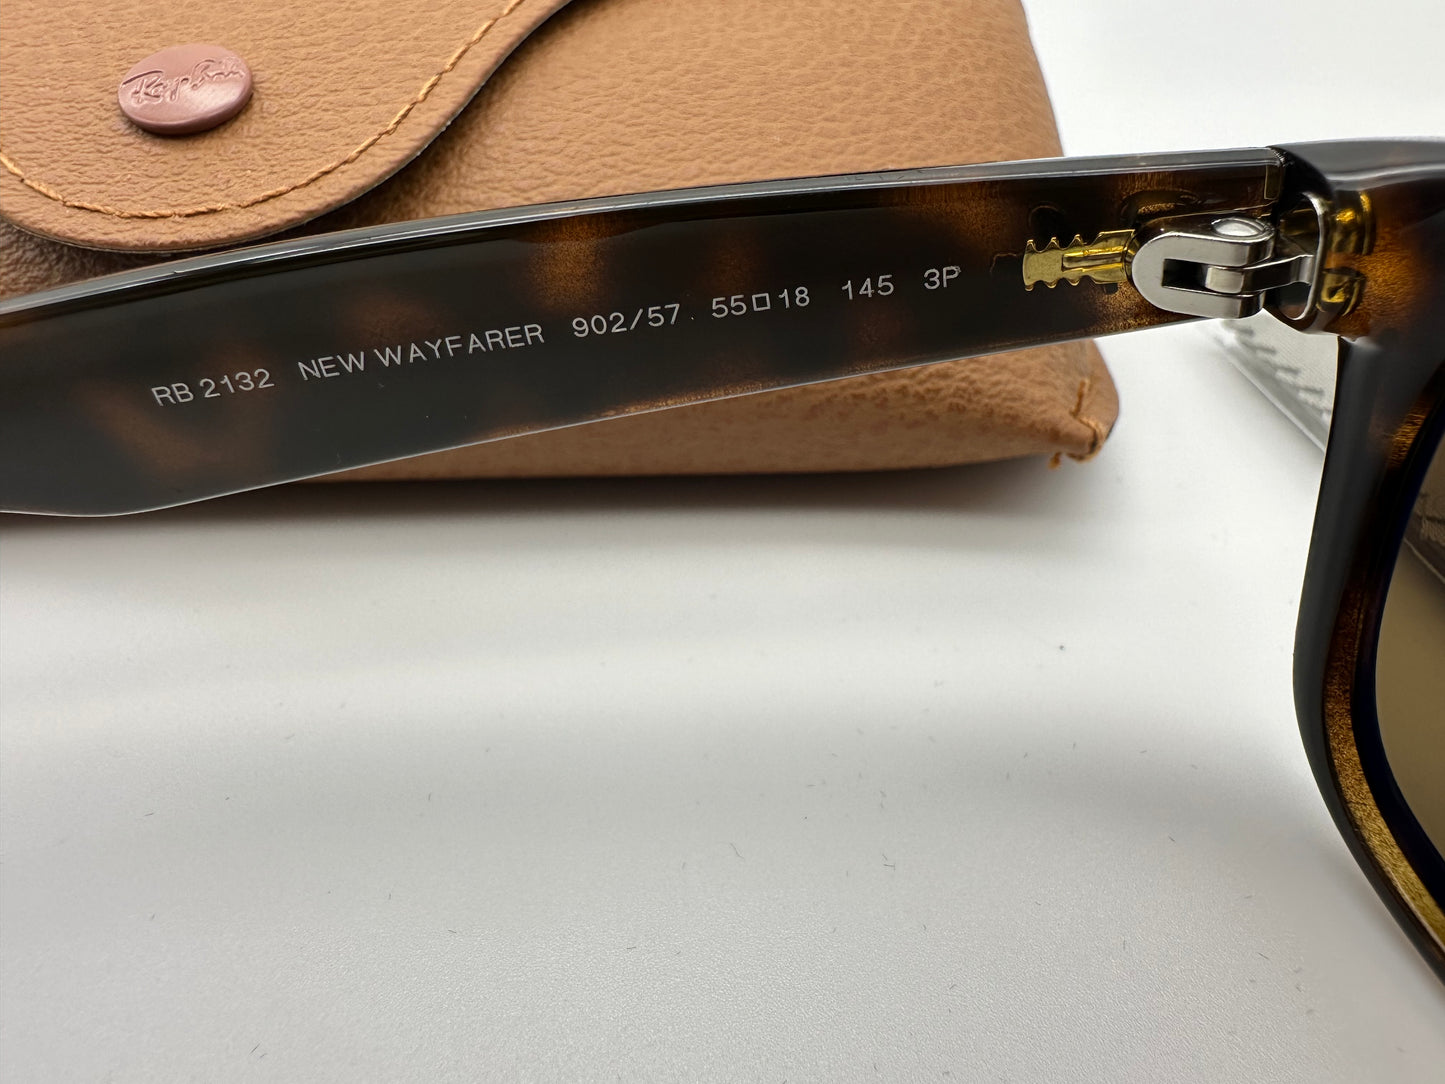 Ray-Ban New Wayfarer 55mm Tortoise B-15 Brown Polarized Sunglasses RB2132 902/57 NEW